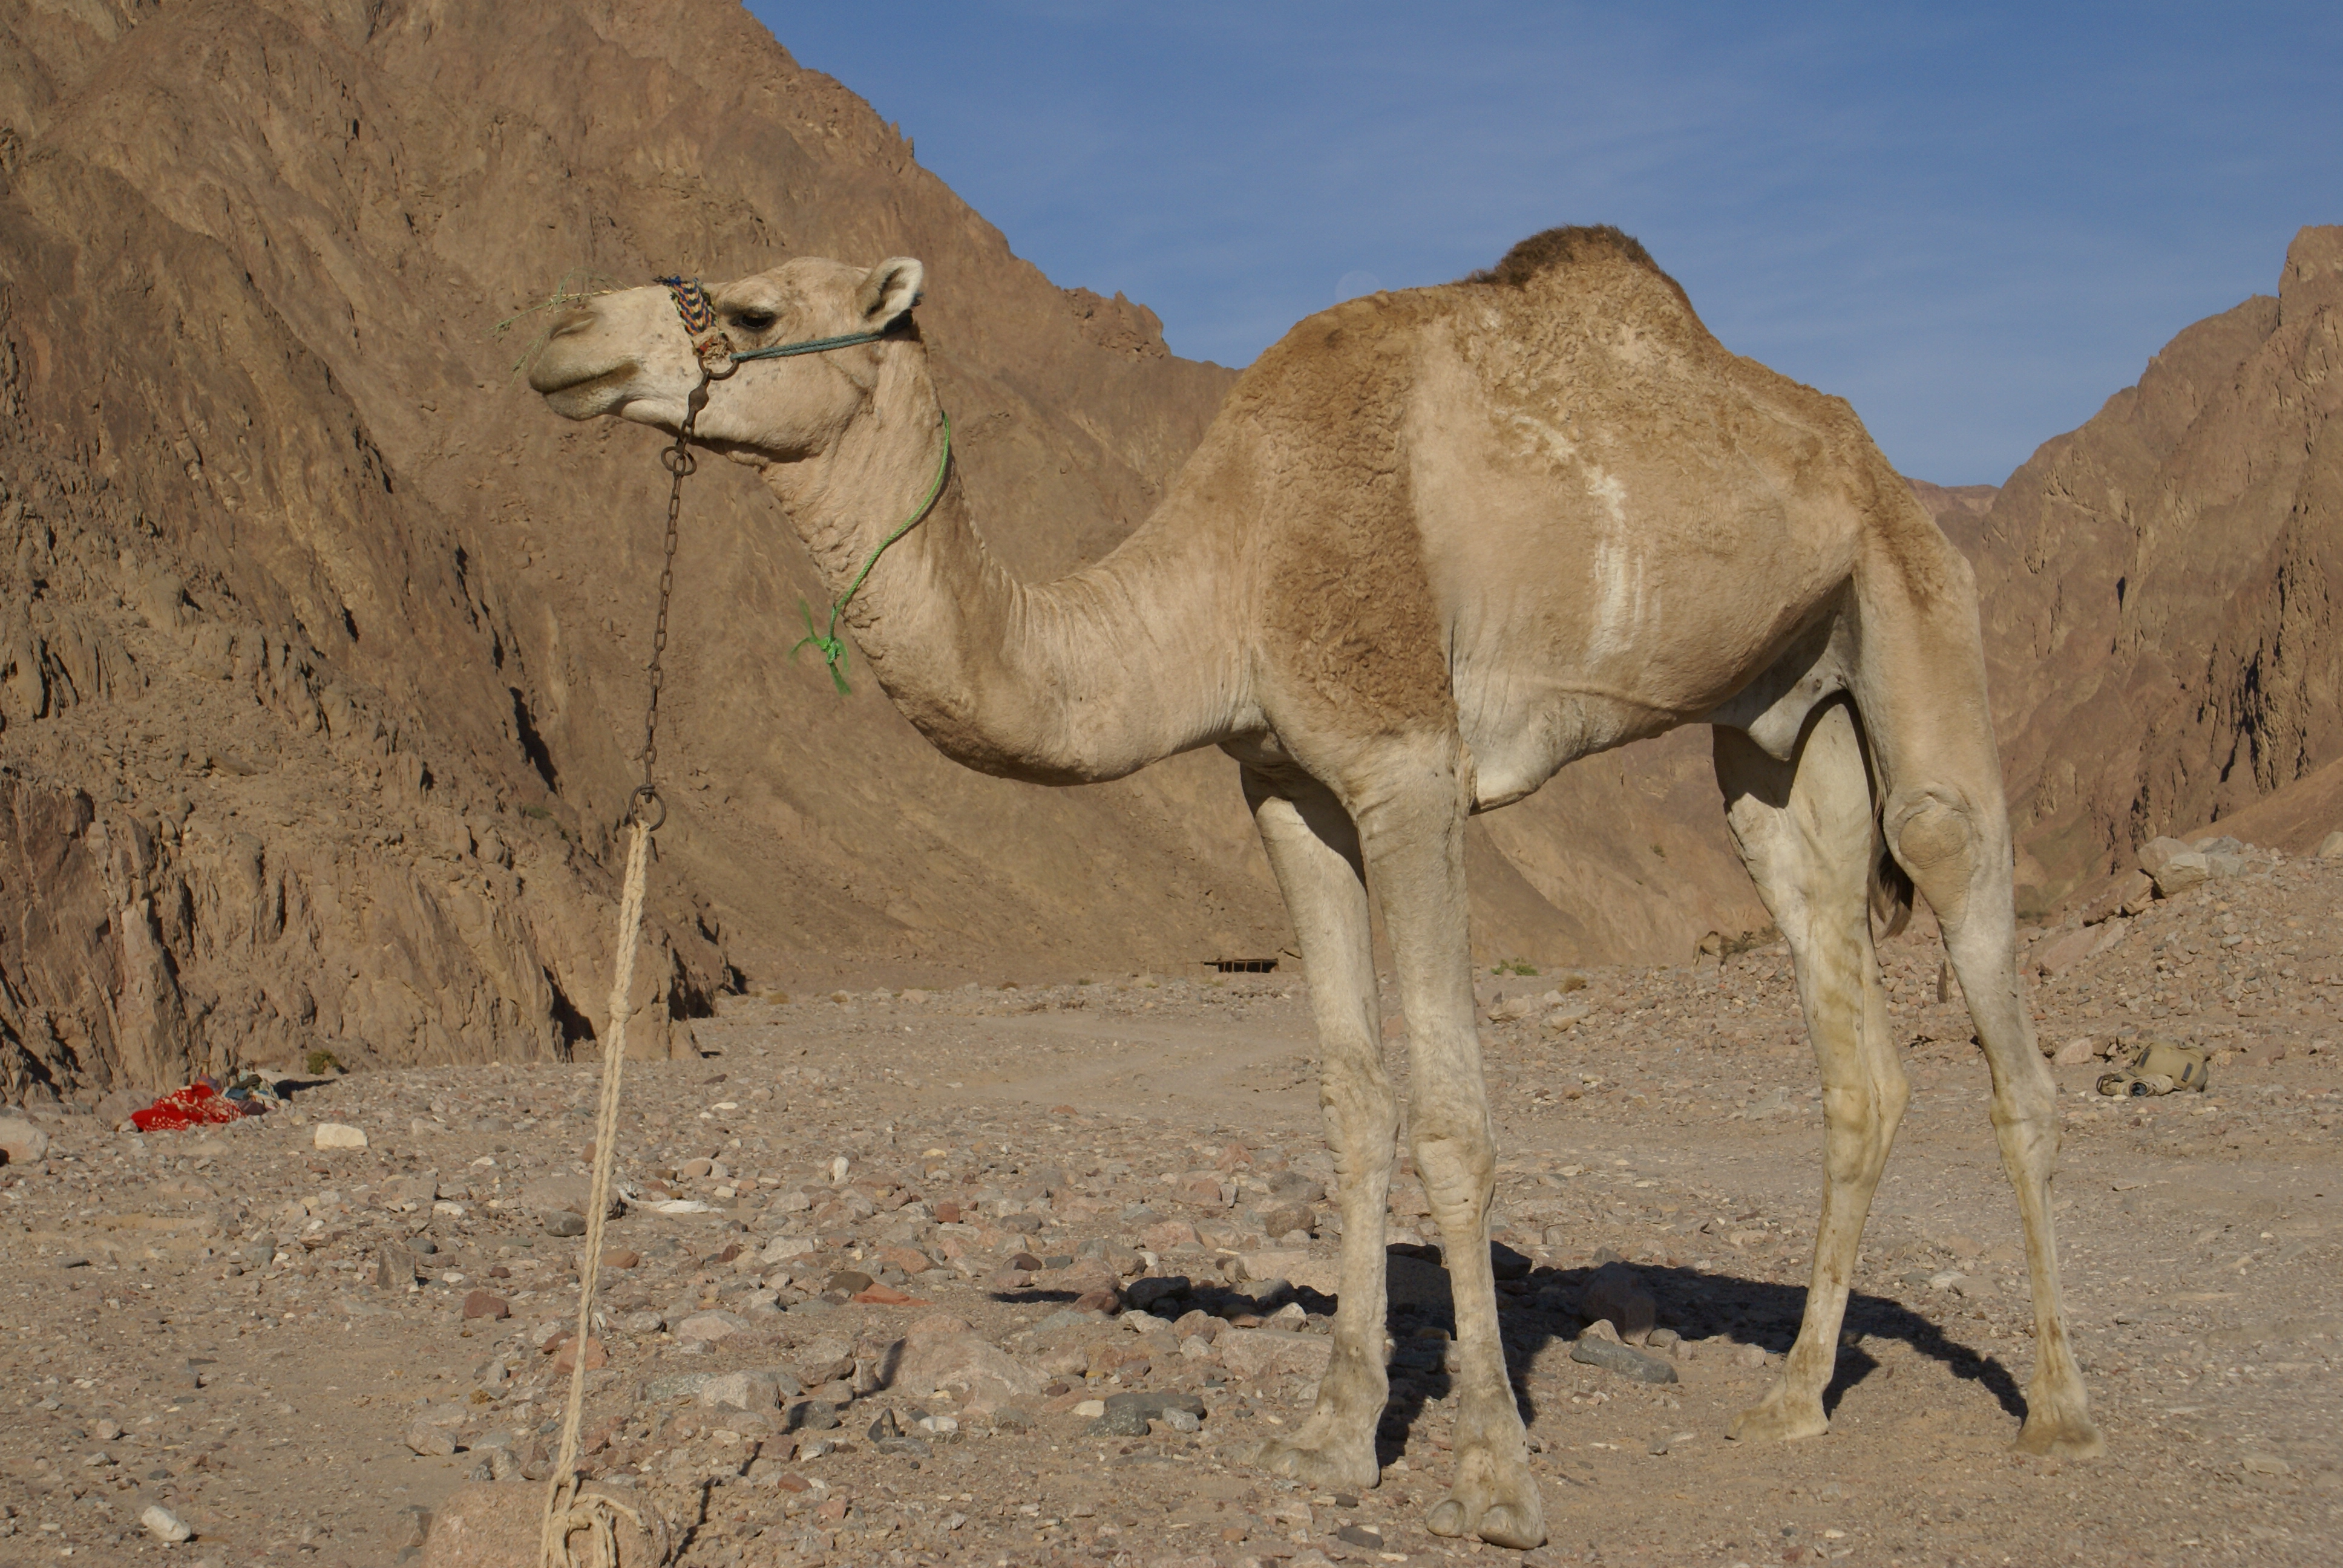 deirdre whitty share samantha brown camel toe photos